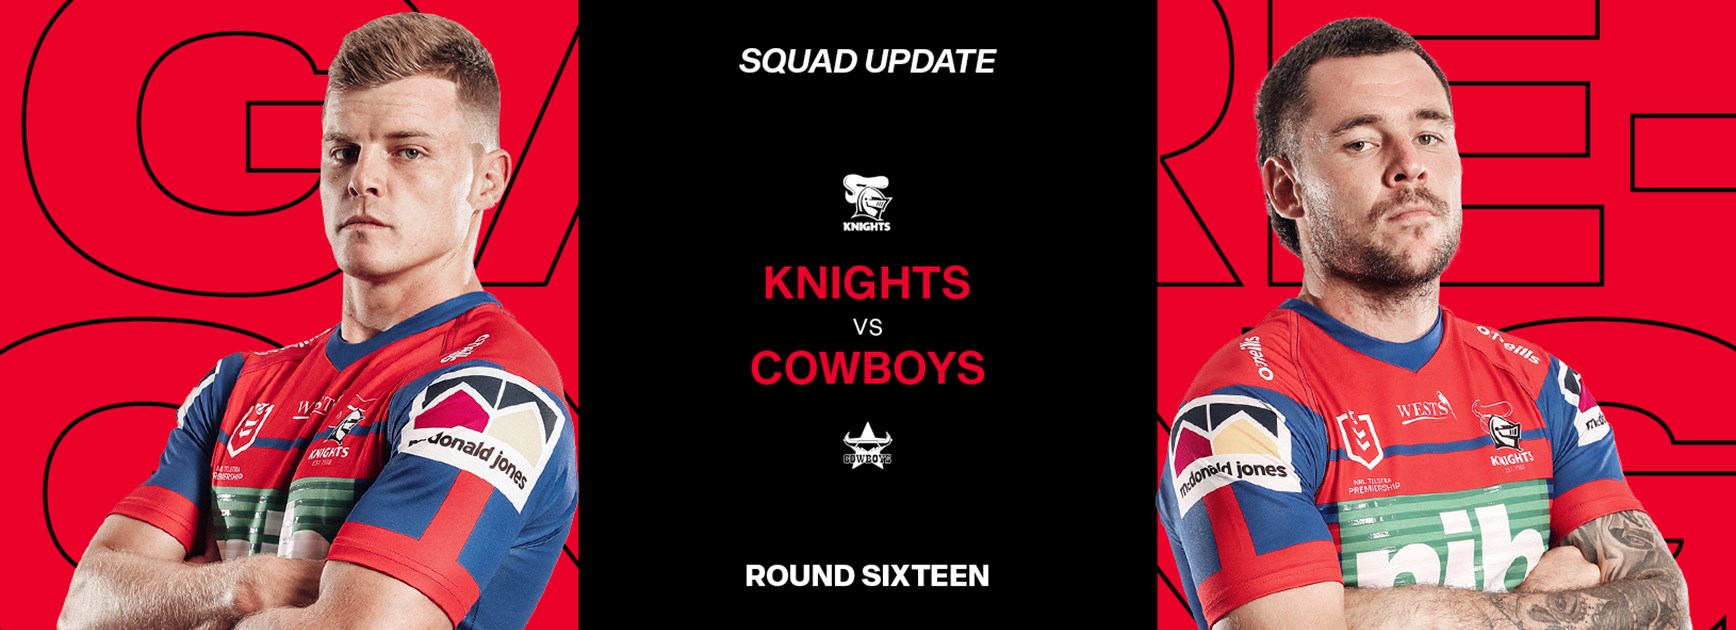 Squad Update: Round 16